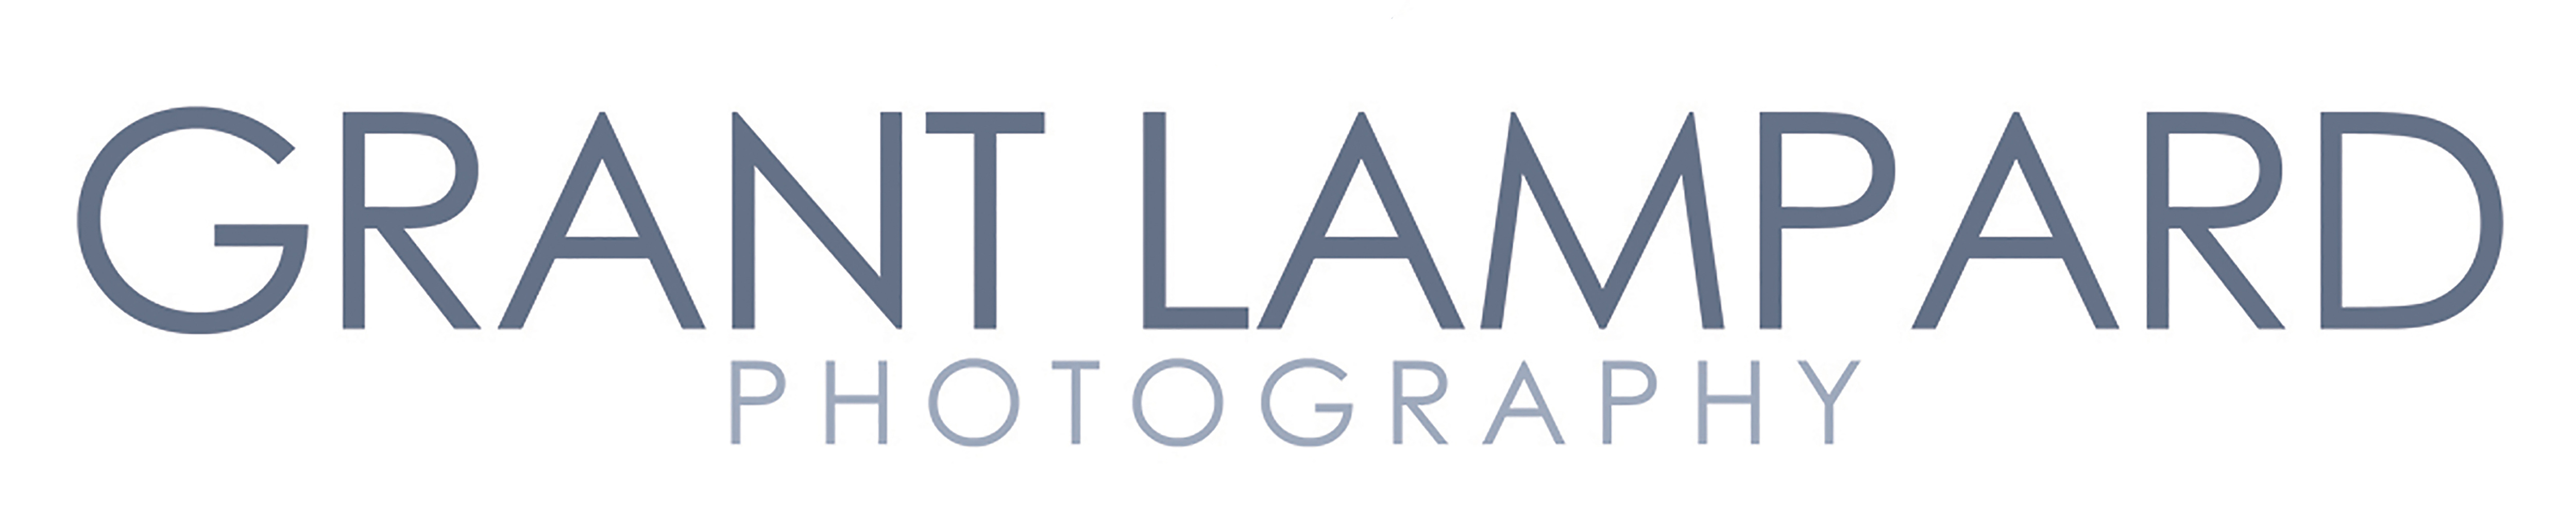 Grant Lampard Photography Logo